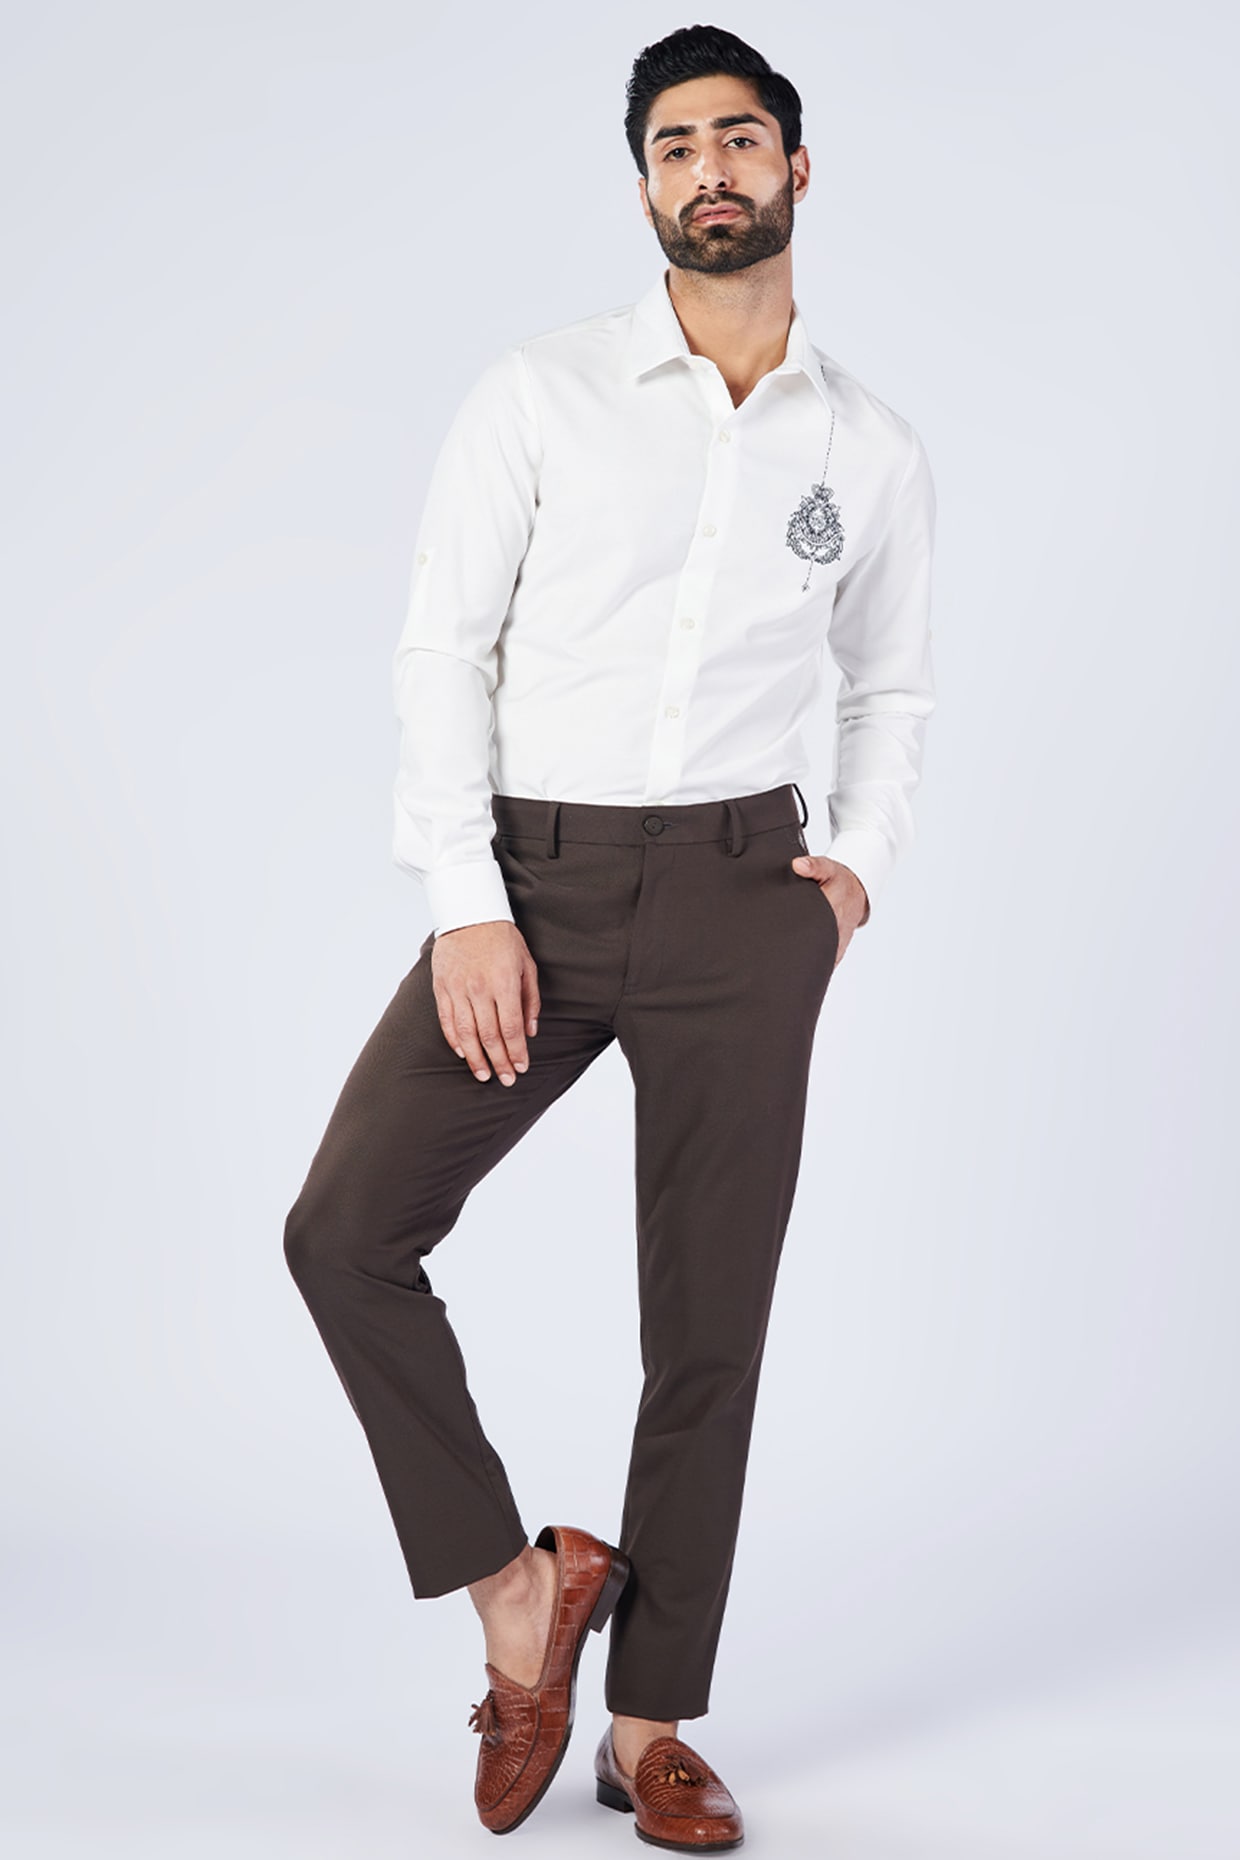 Top 20 Latest Simple  Beautiful Trouser Designs for Men  Apan Outlook